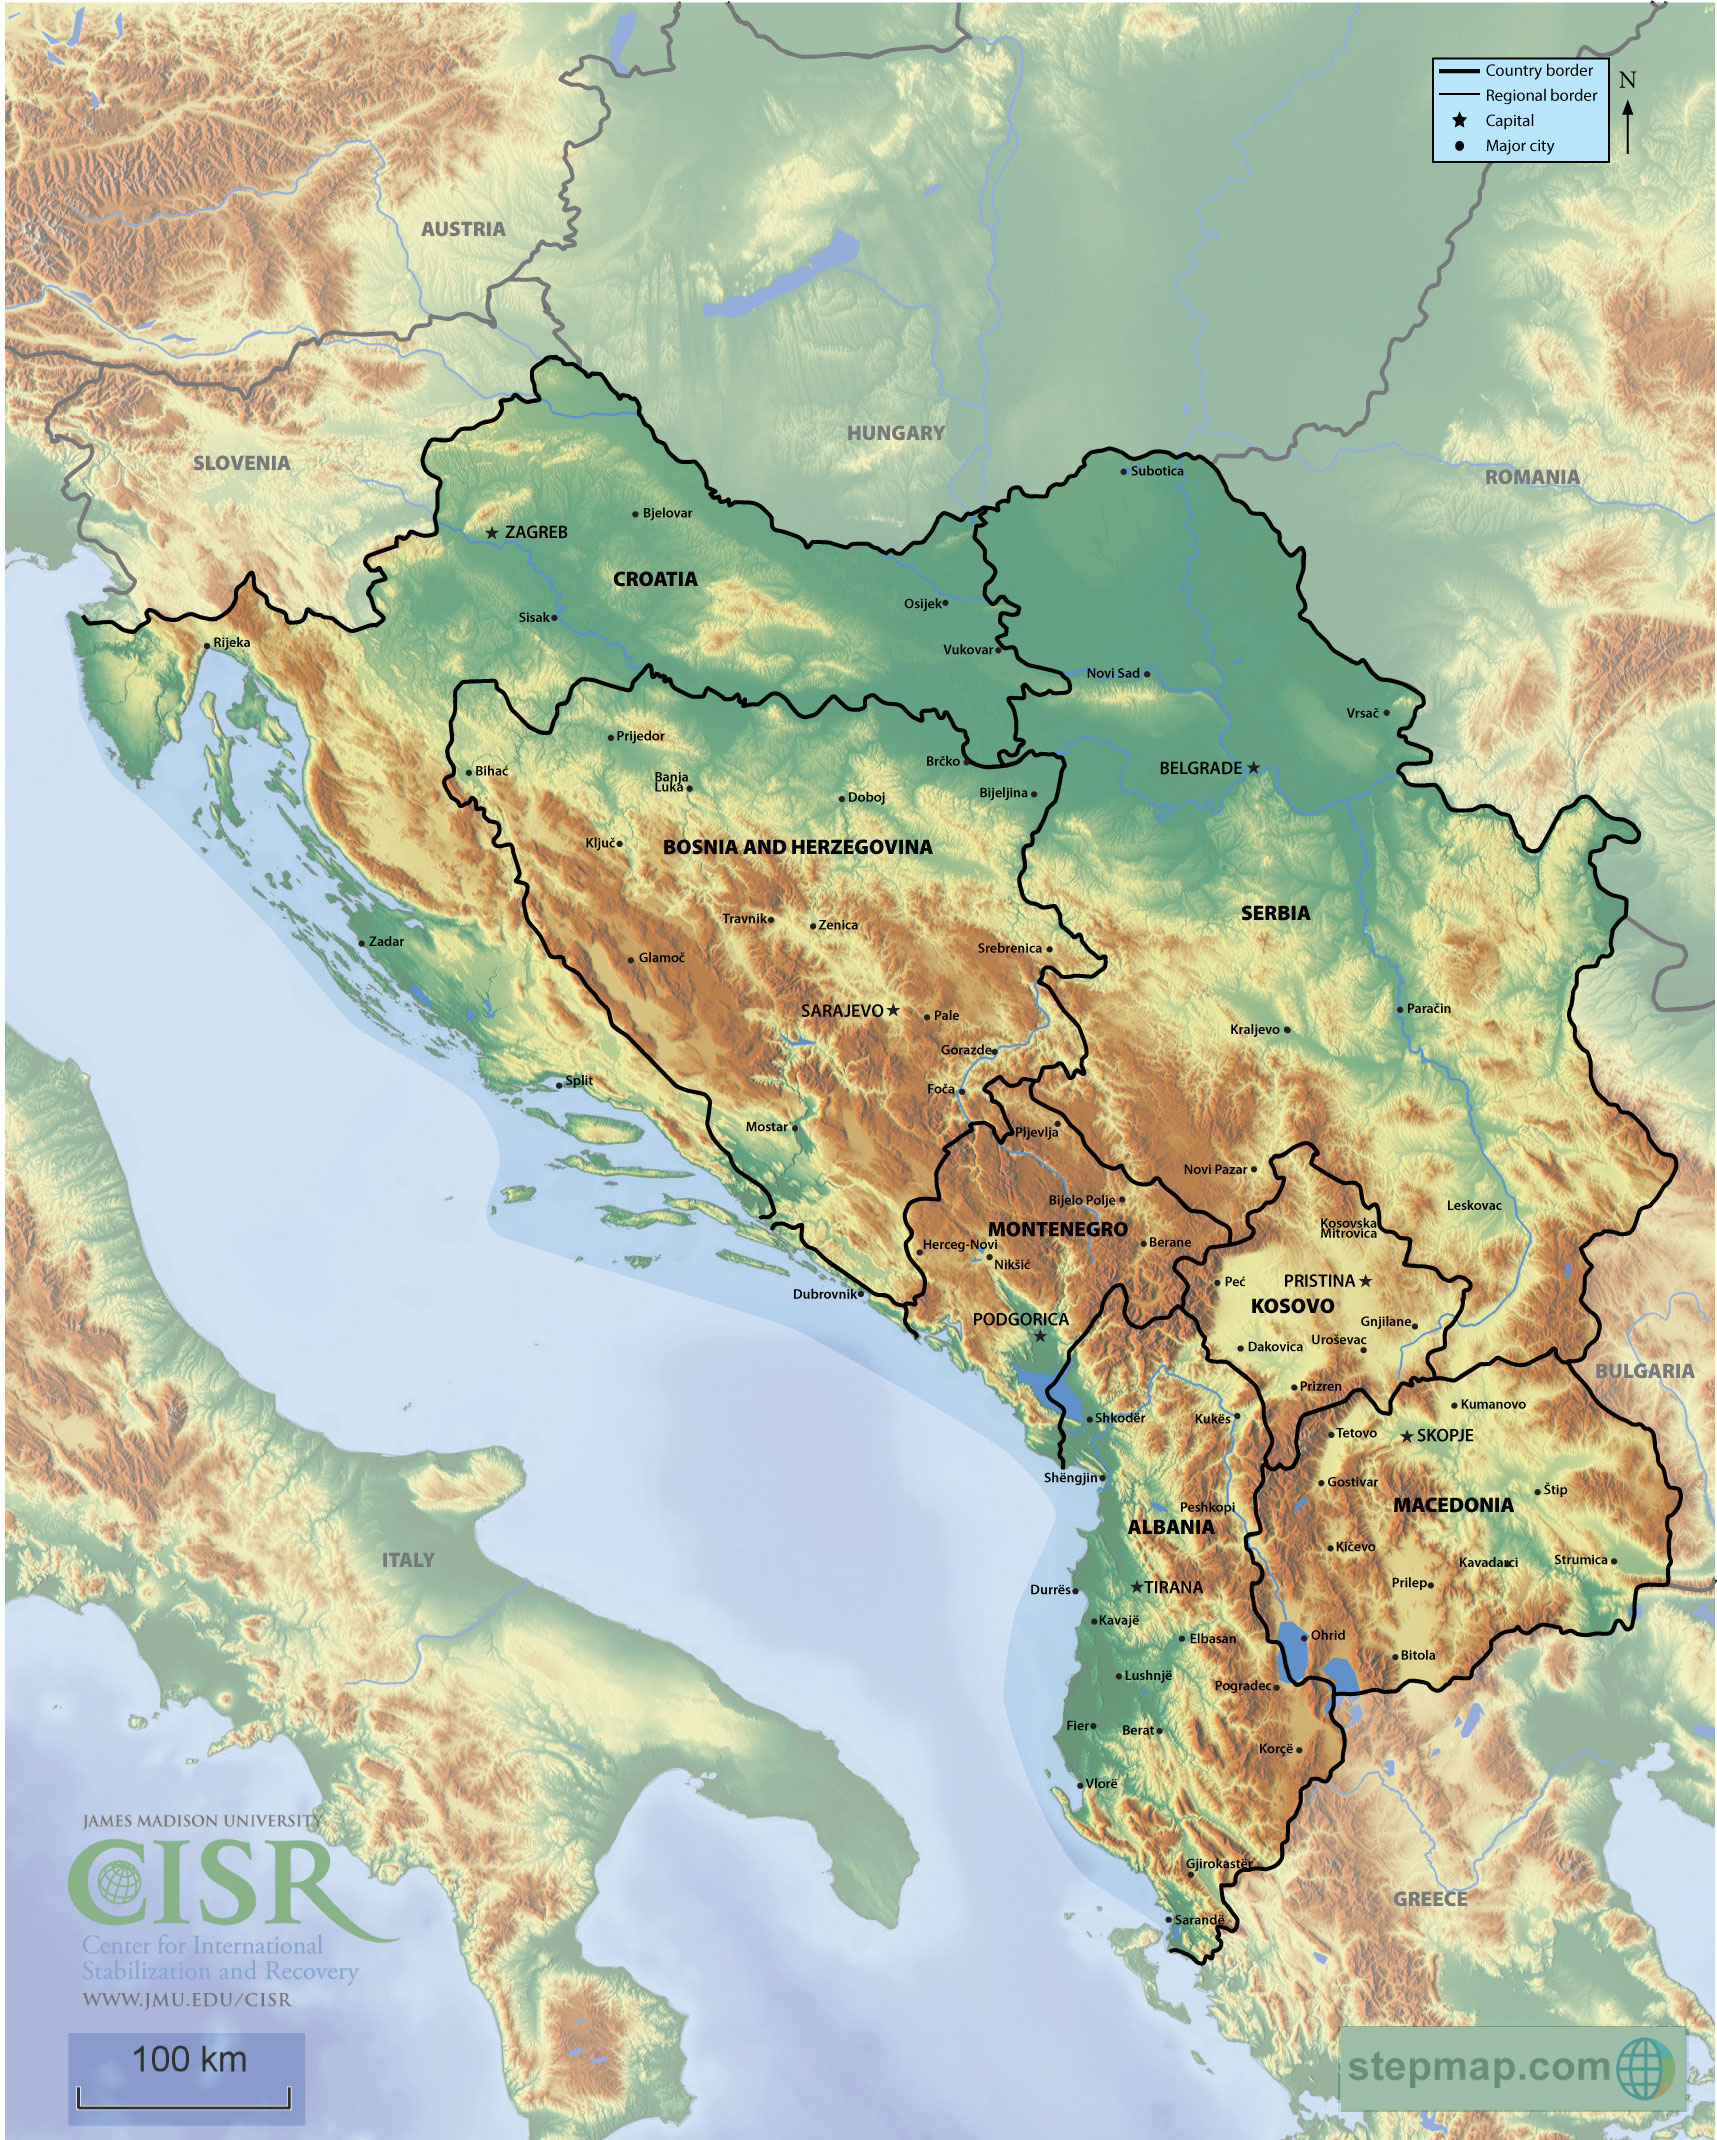 CISR: Maps of Europe - JMU